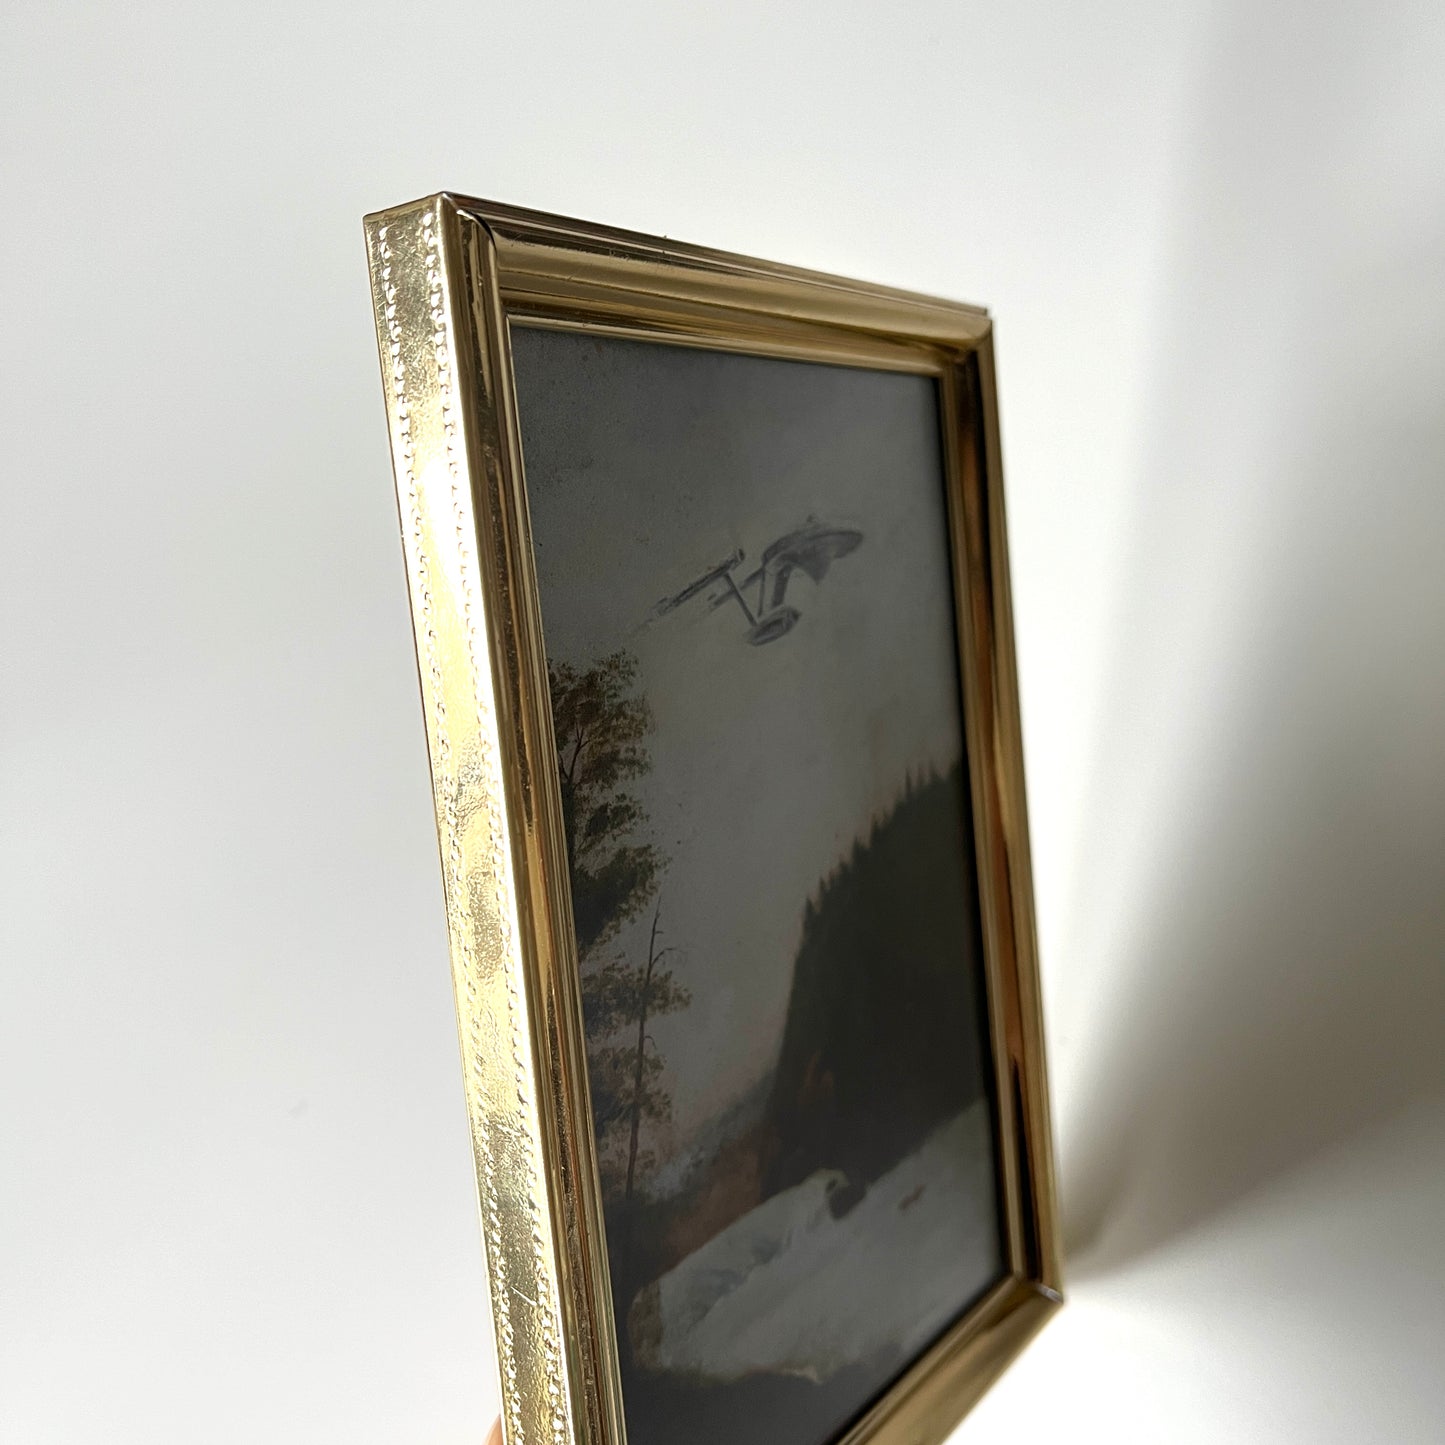 Boldly Go : NCC-1701 - PRINT in Vintage Frame, Brass plated